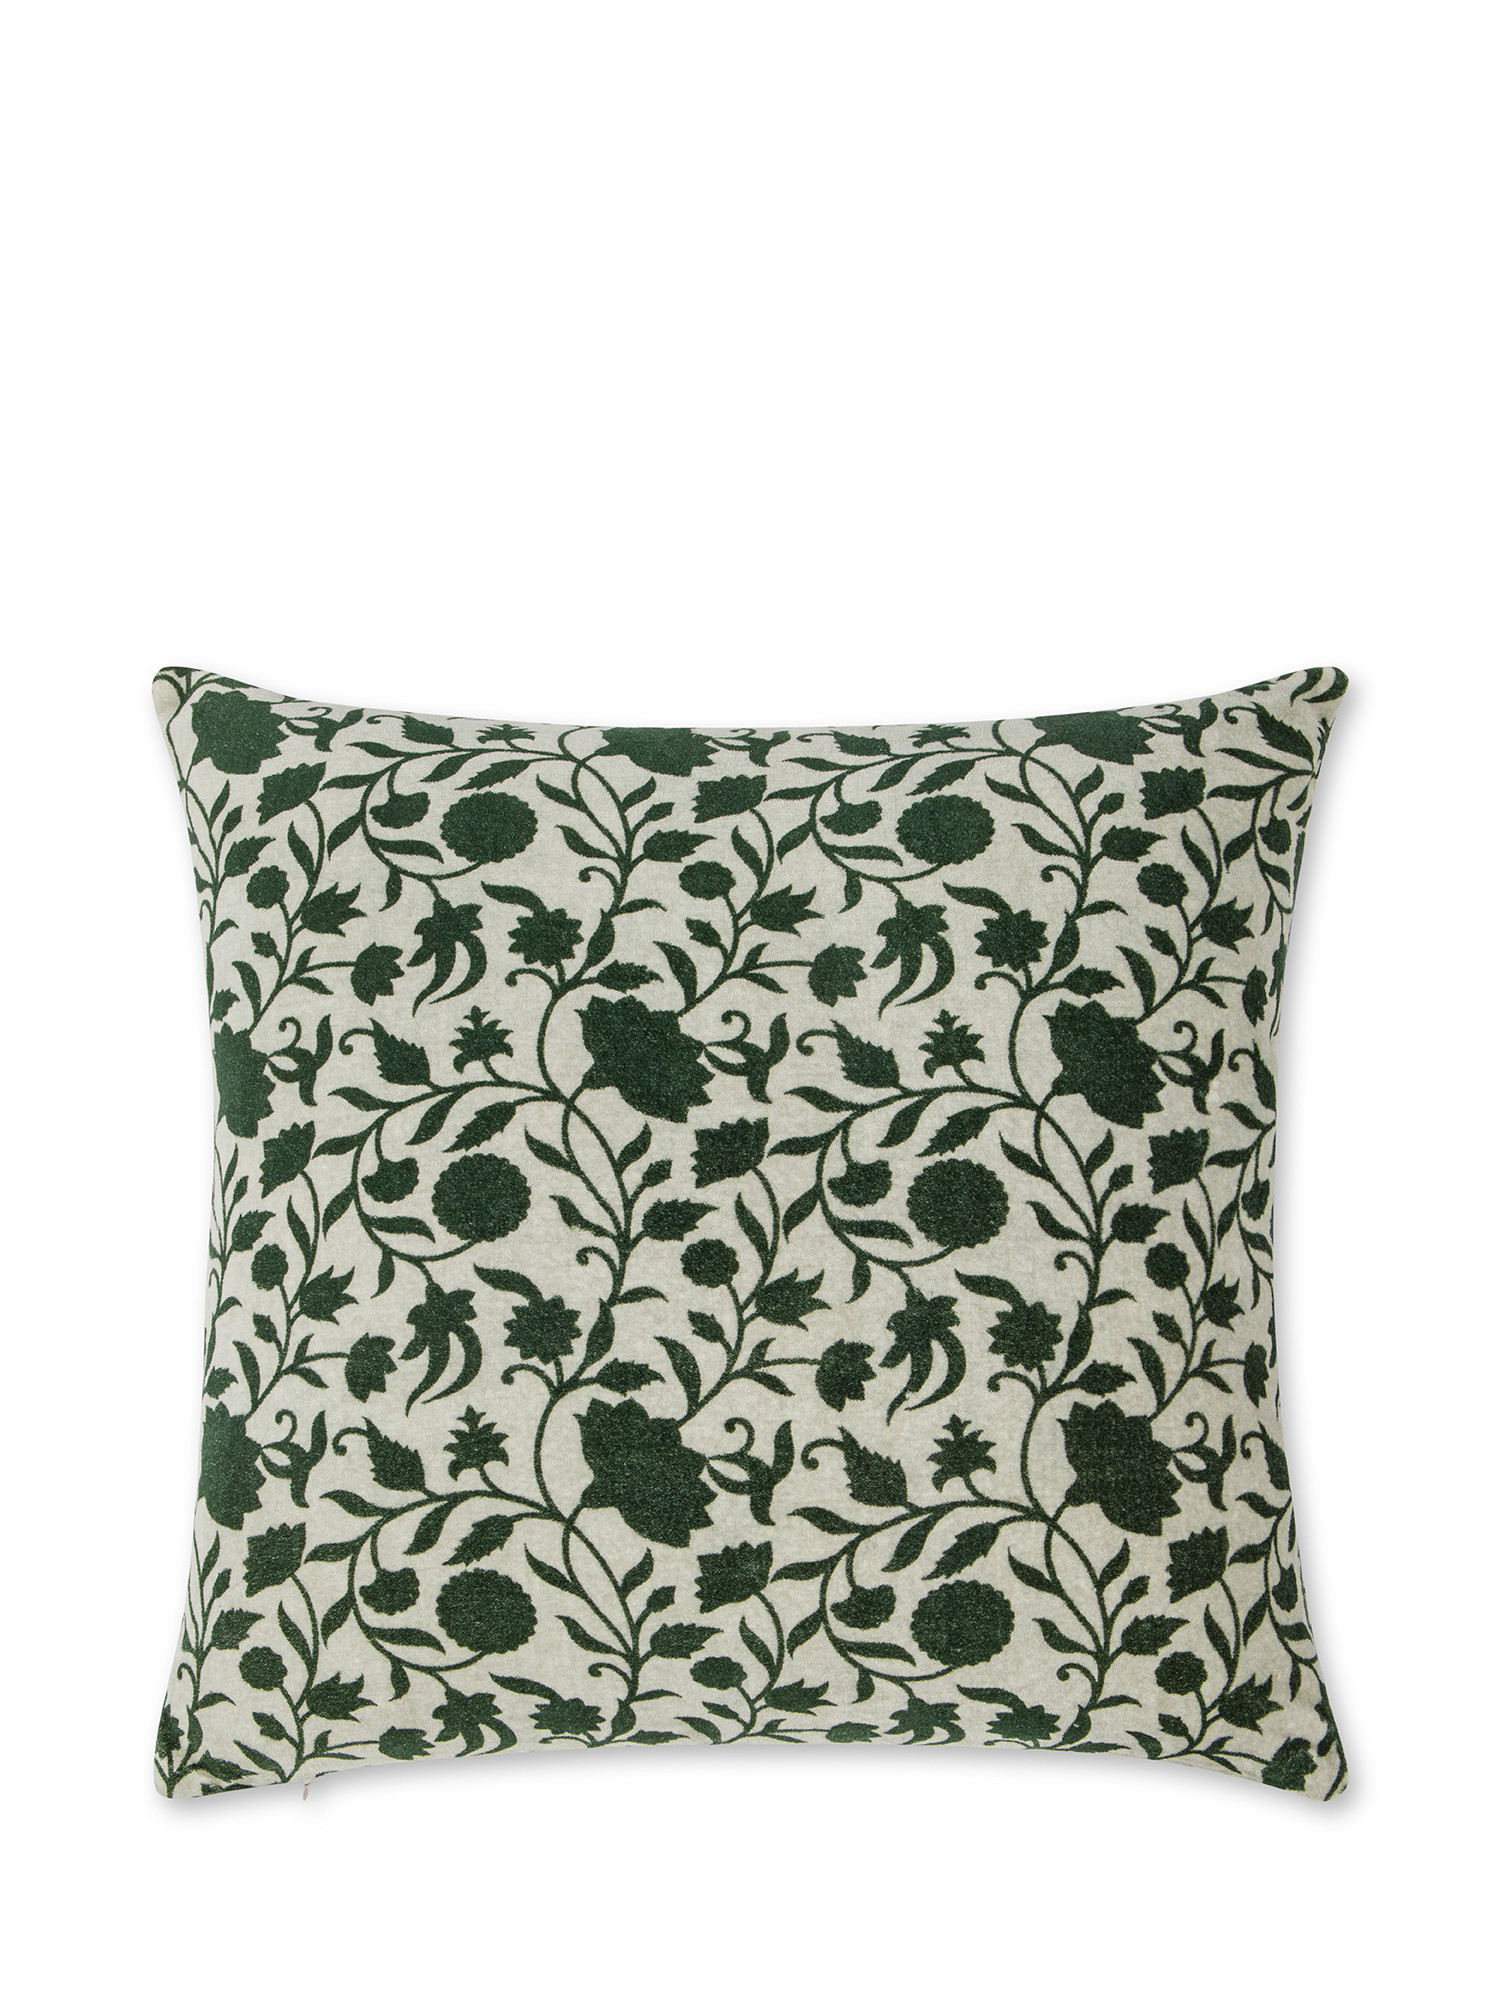 Cuscino velluto stampato motivo fiori 45X45cm, Verde, large image number 0